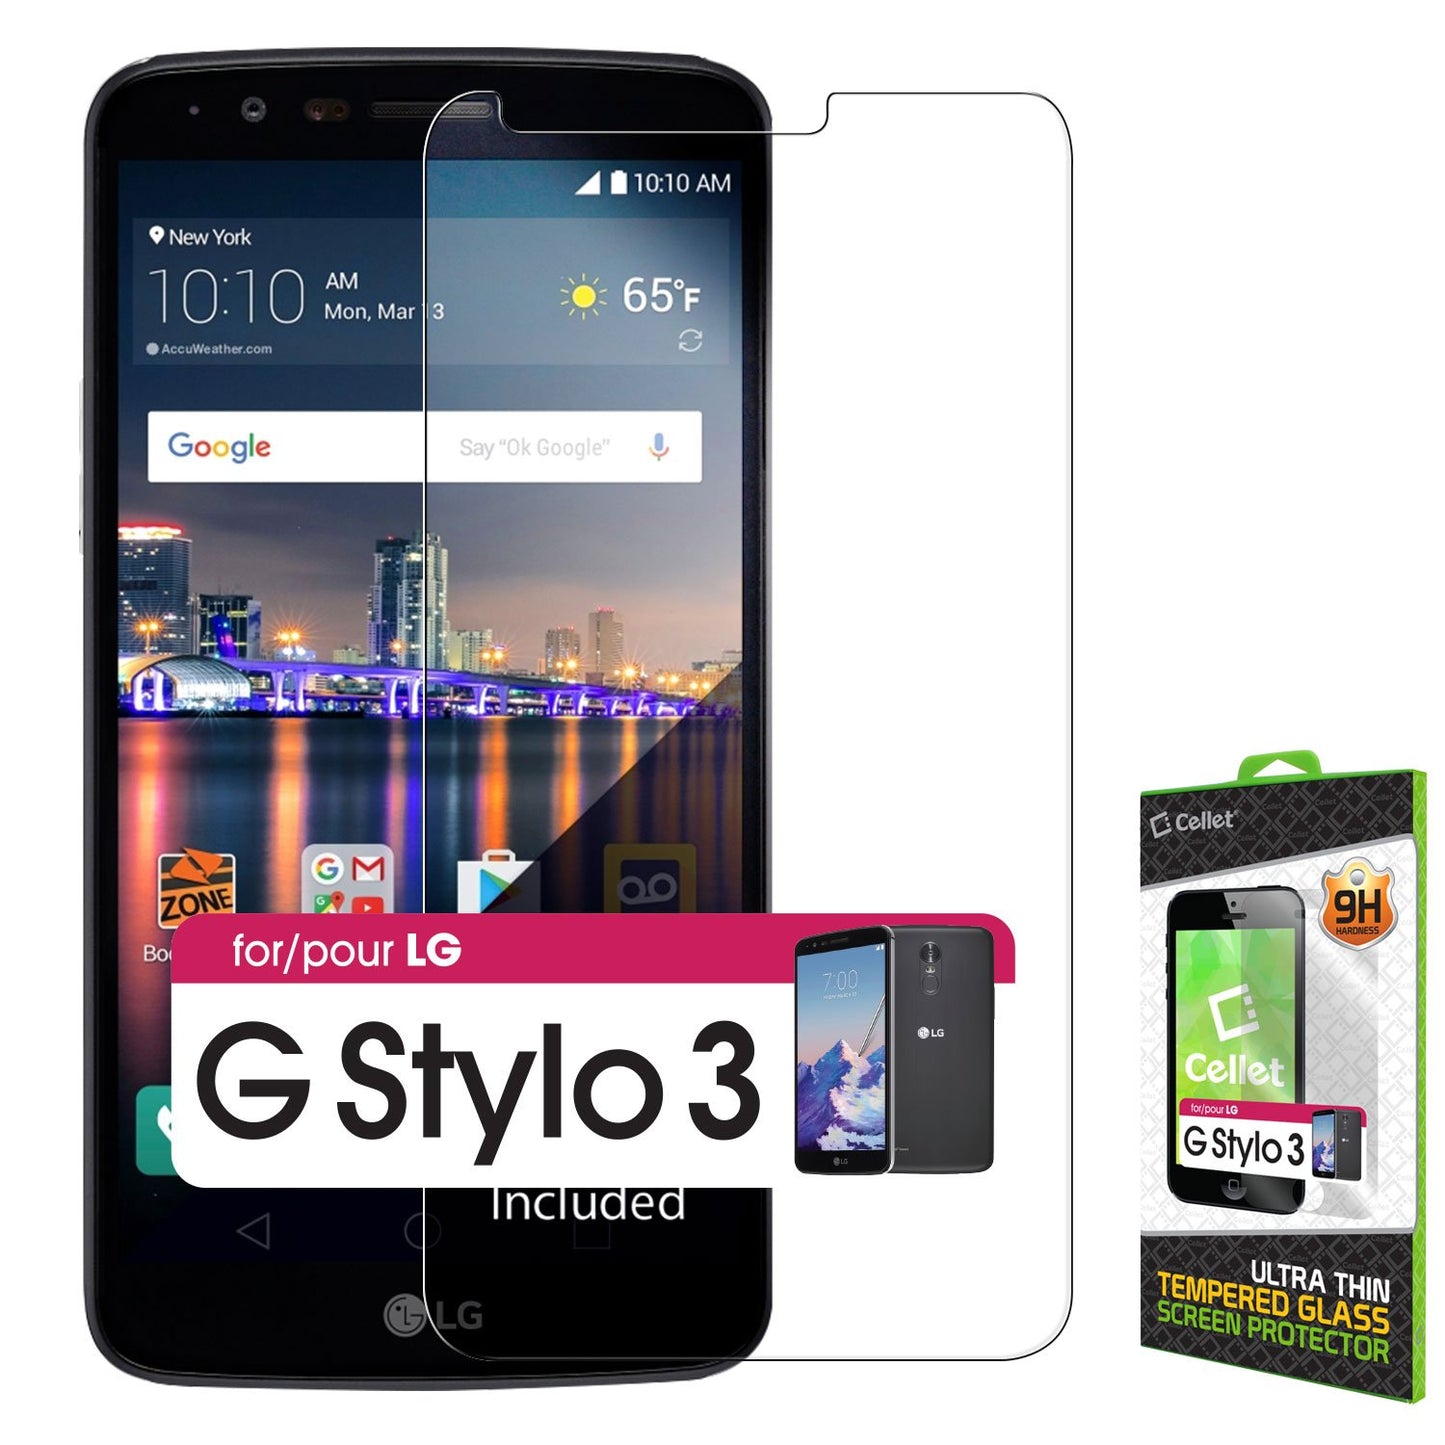 SGLGGSTY3 - LG G Stylo 3 Tempered Glass Screen Protector, Cellet 0.33mm Premium Tempered Glass Screen Protector for LG G Stylo 3 (9H Hardness)